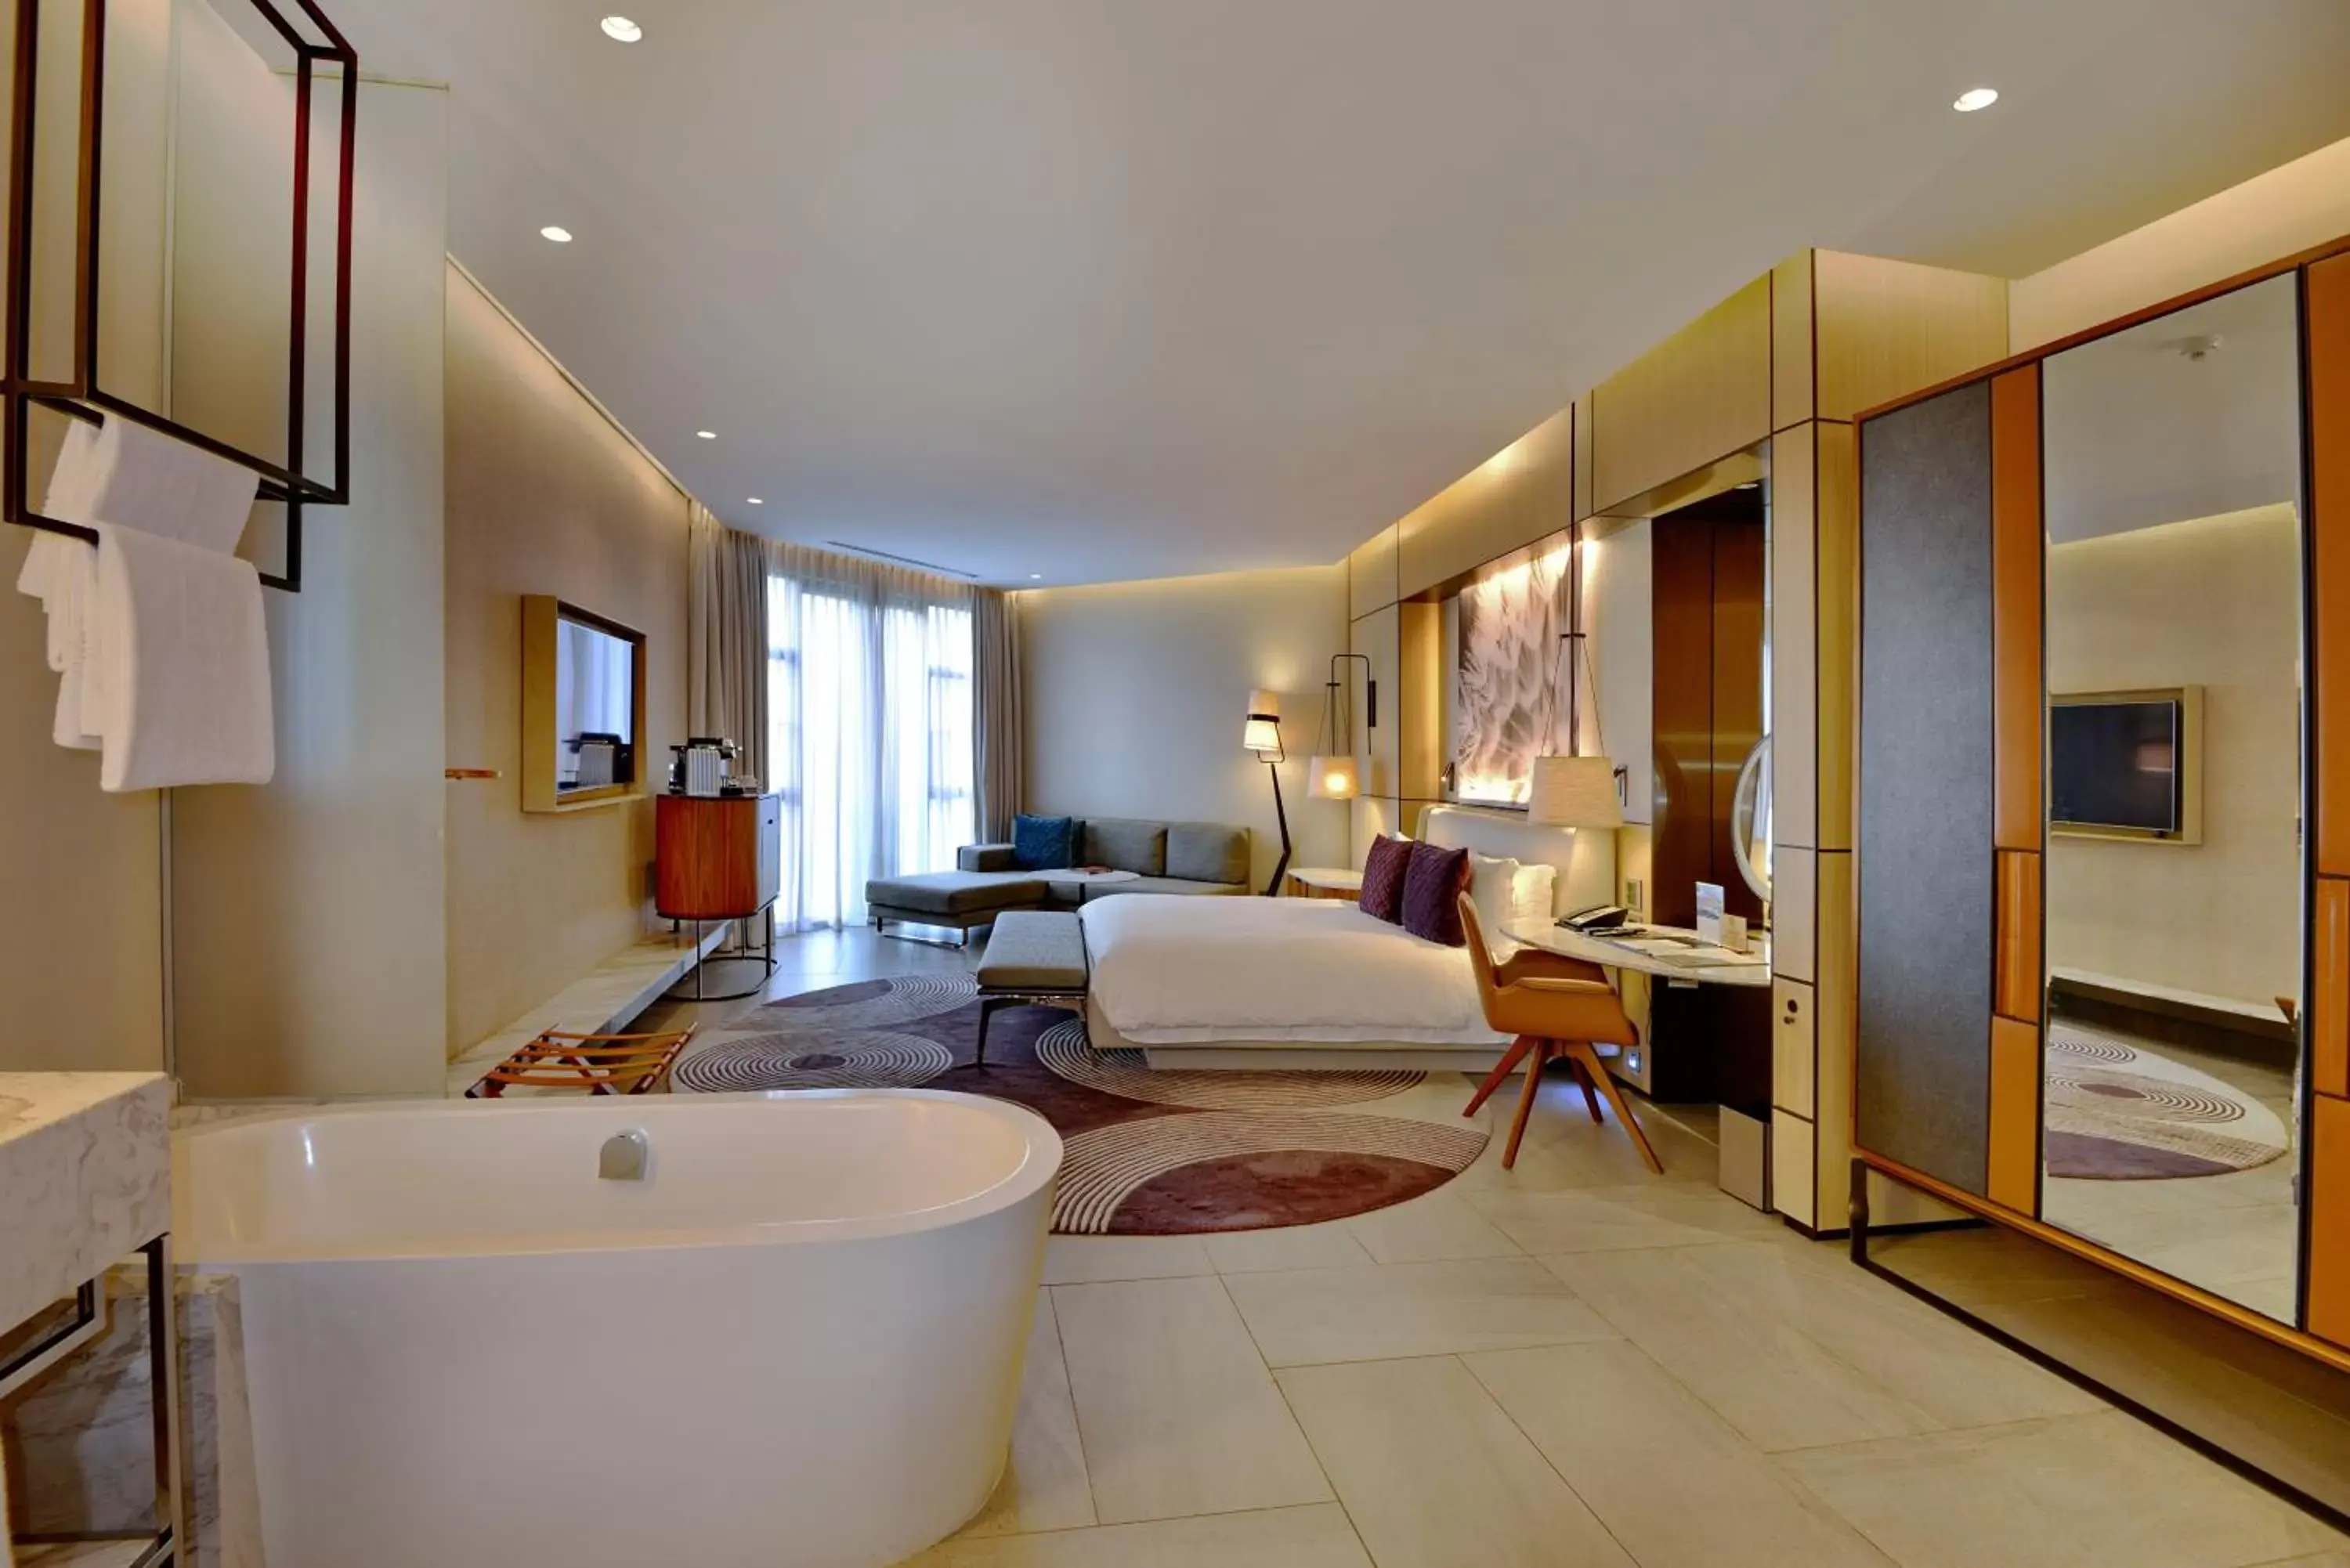 Bathroom in The Houghton Hotel, Spa, Wellness & Golf